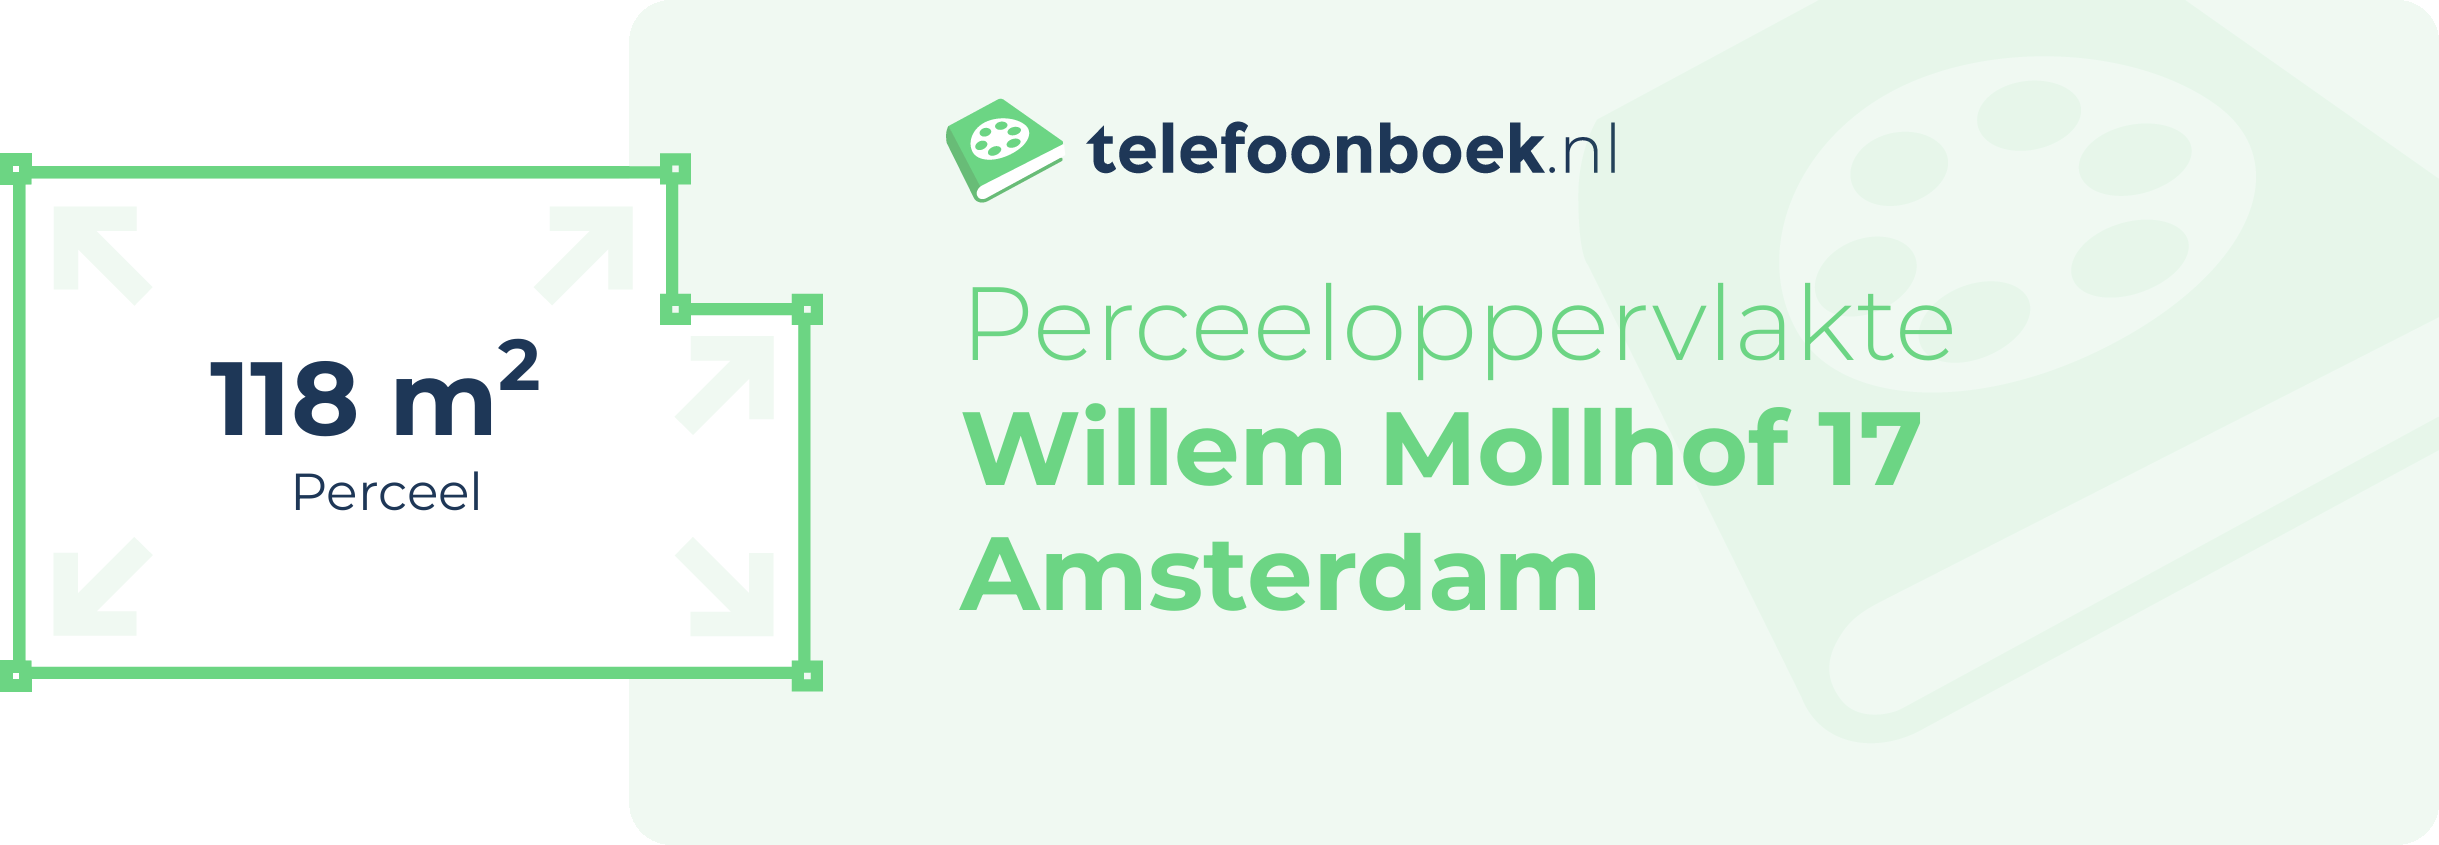 Perceeloppervlakte Willem Mollhof 17 Amsterdam